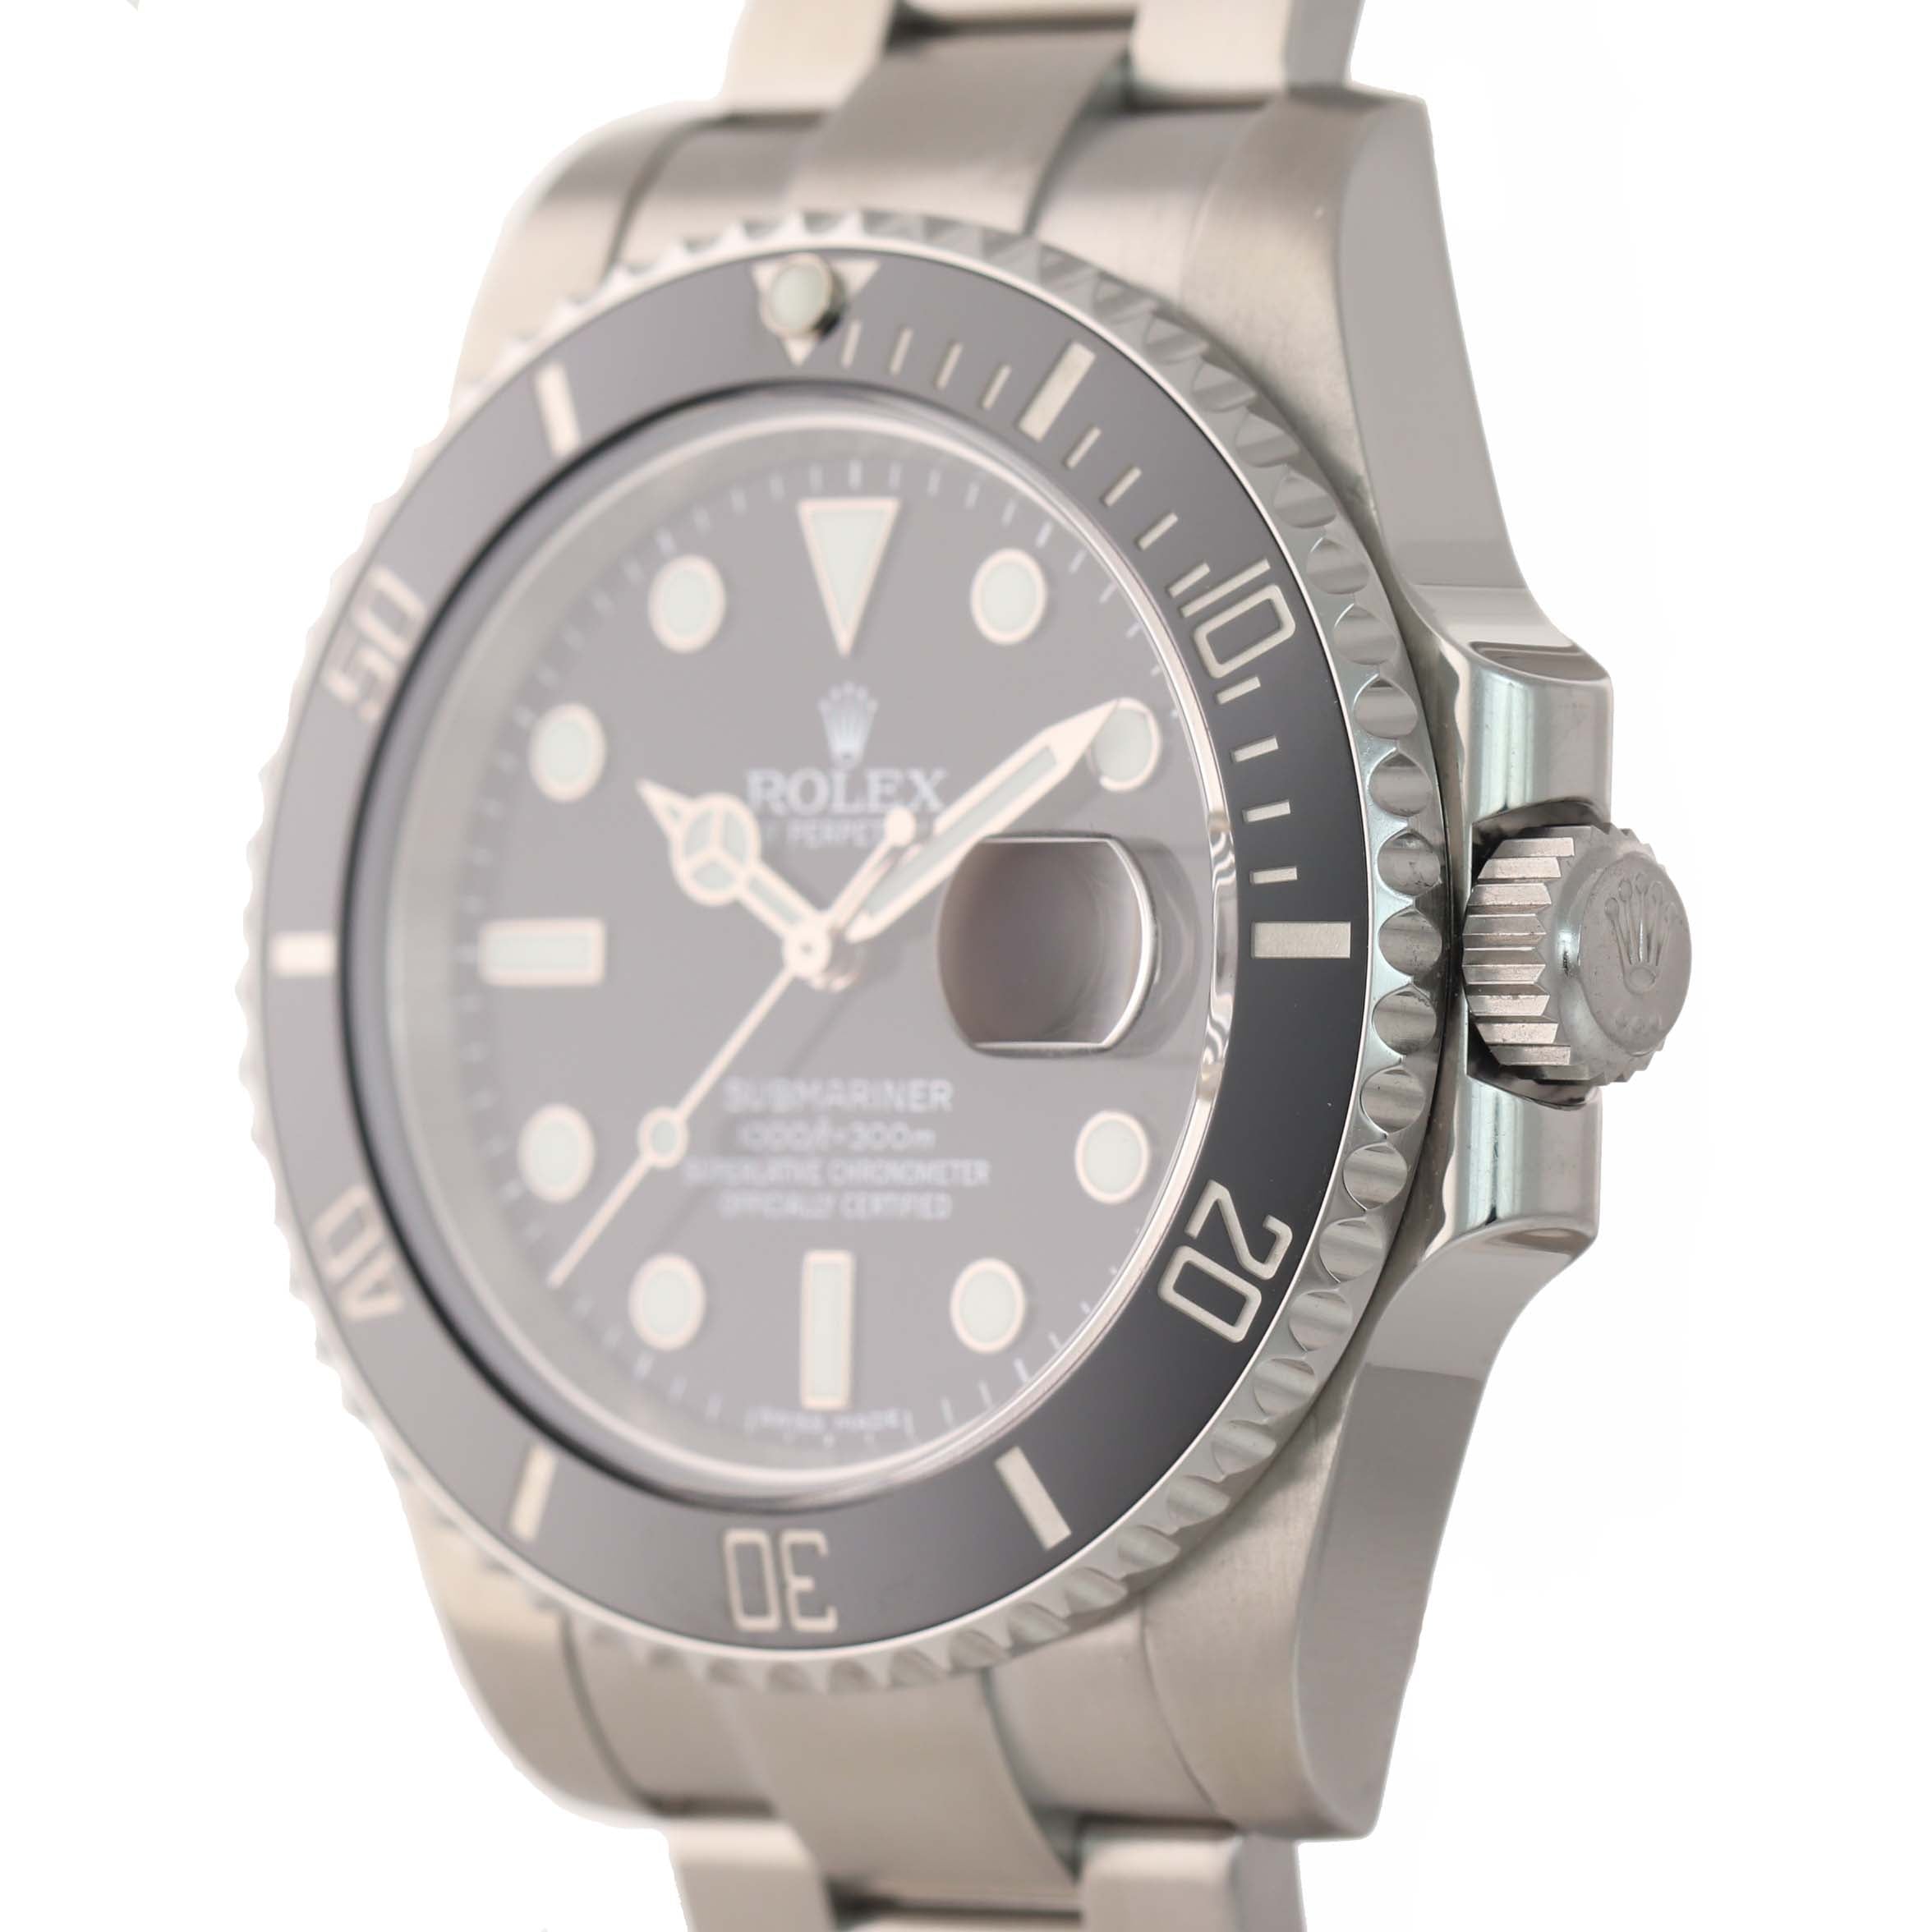 Rolex Submariner Date 116610 Steel Black Dial Ceramic Bezel Watch Box